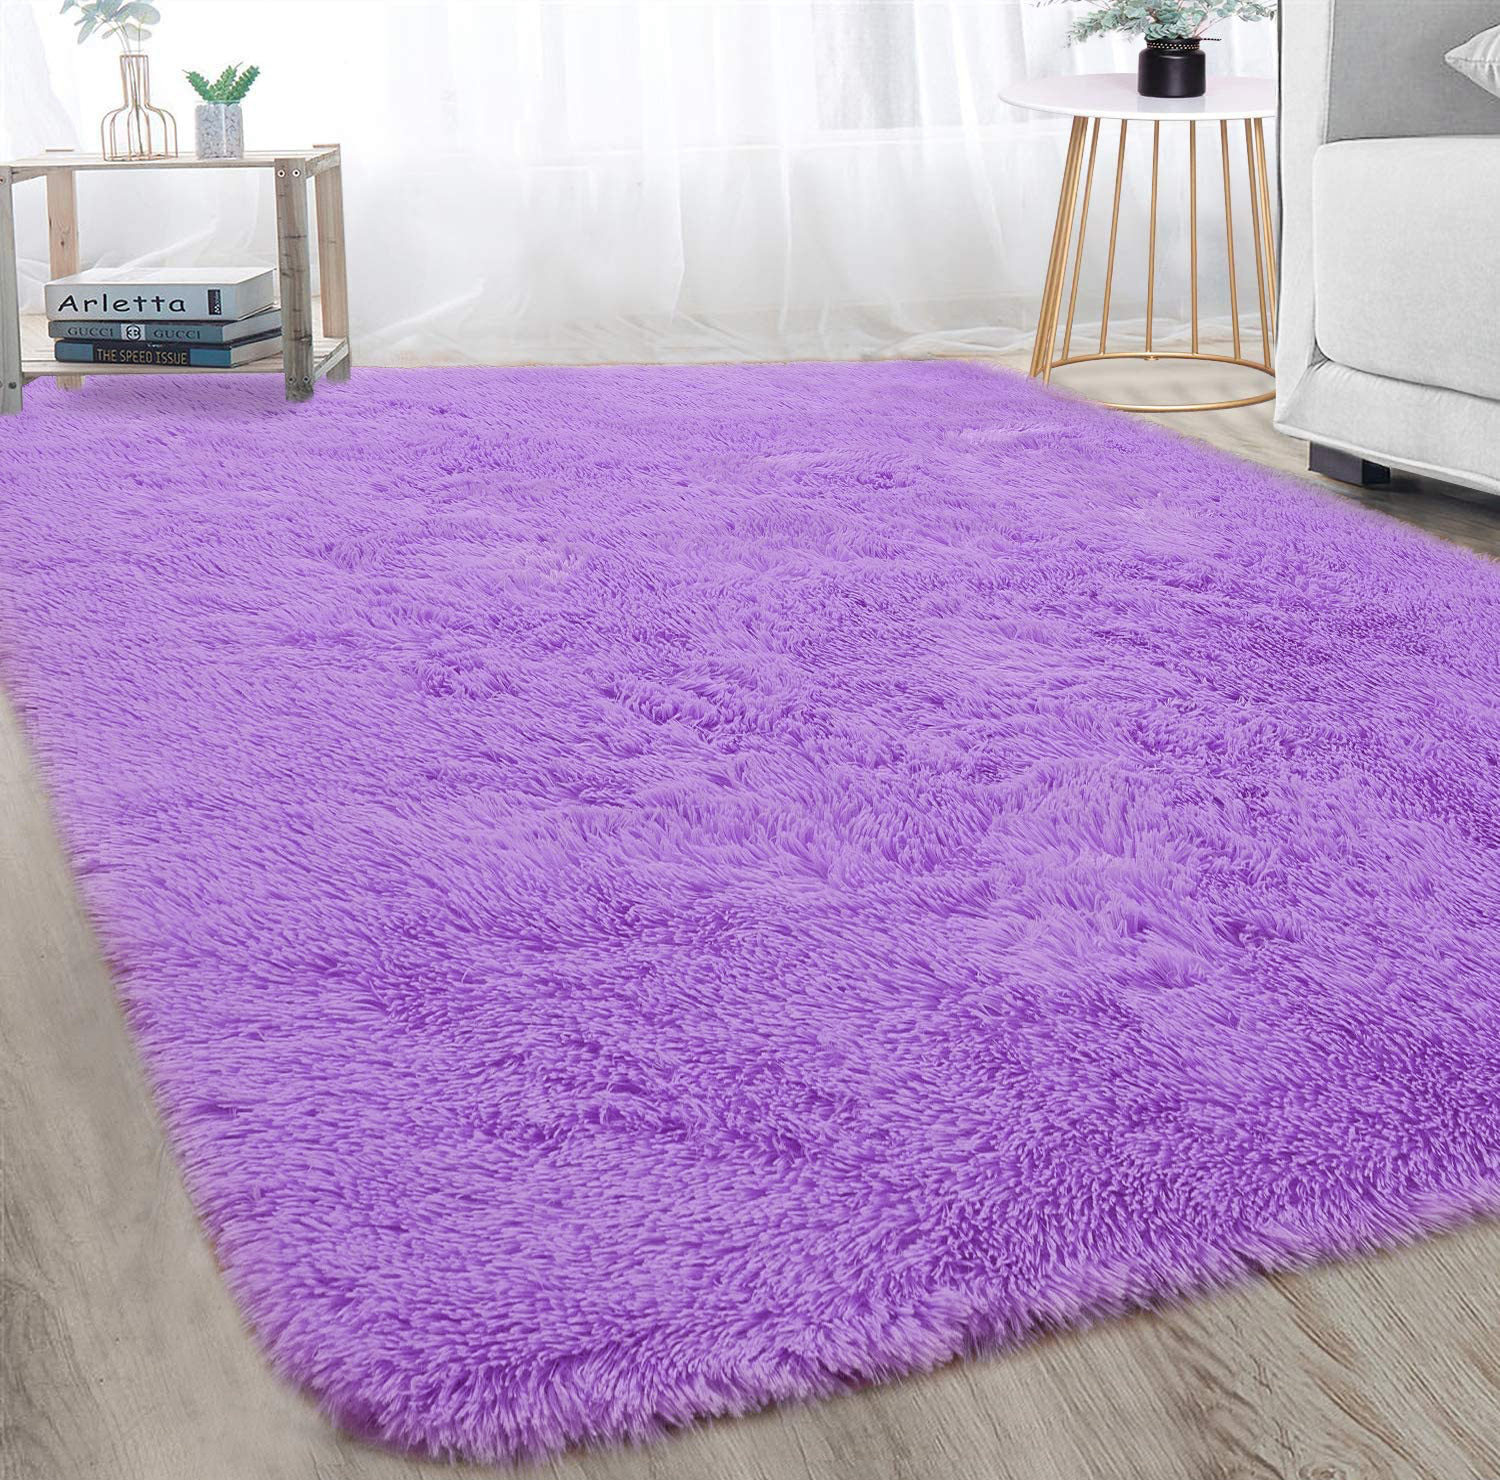 XL Extra Large Soft Shag Rug Carpet Mat (Purple, 300 x 200)